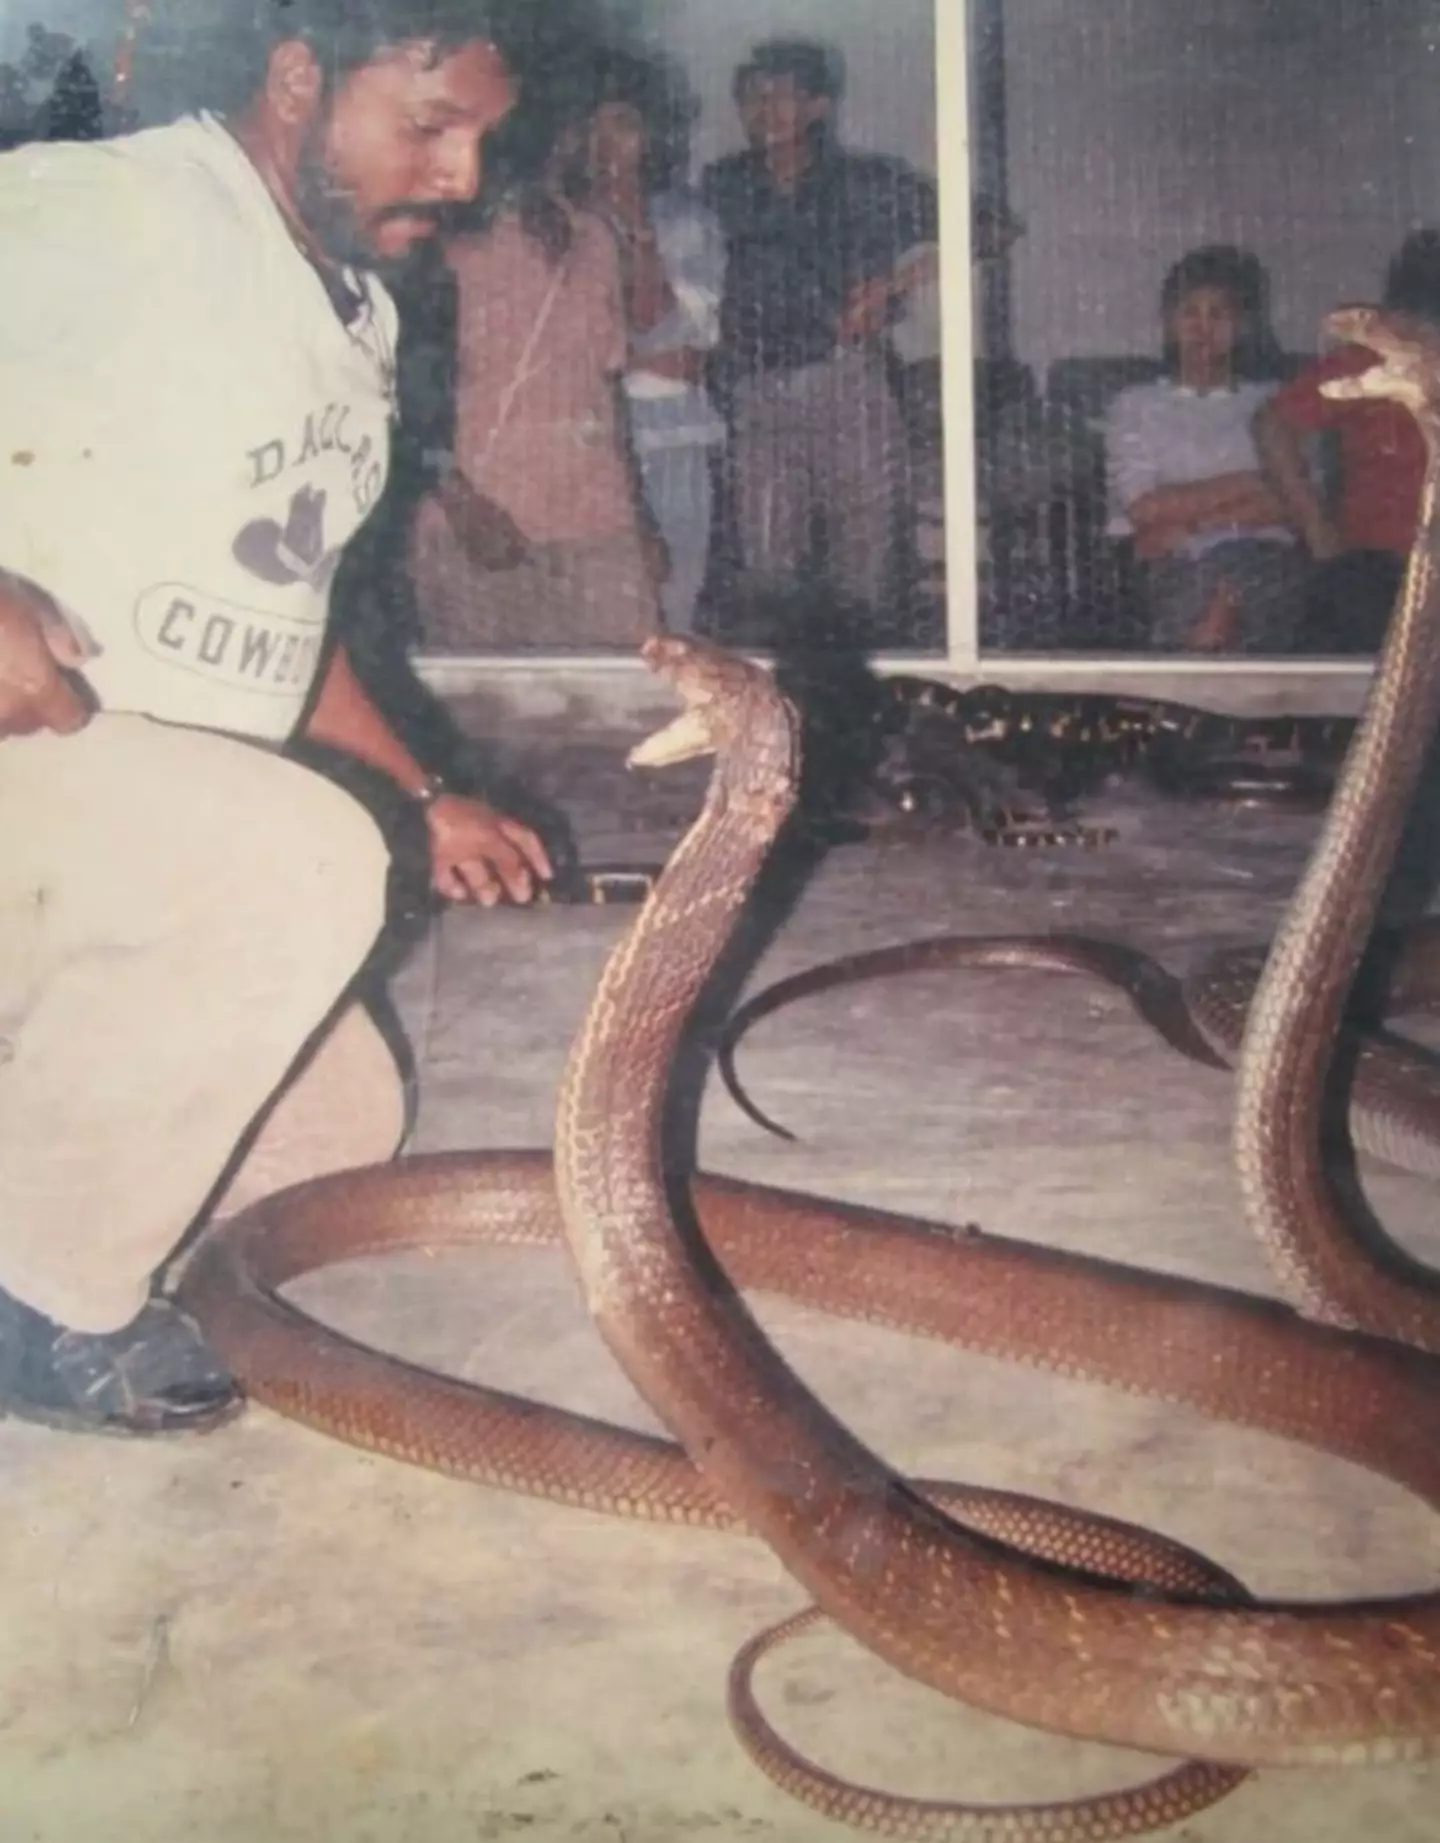 Ali Khan Samsudin earned himself the title of 'Snake King' after spending 40 days locked inside a small room with 400 cobras.